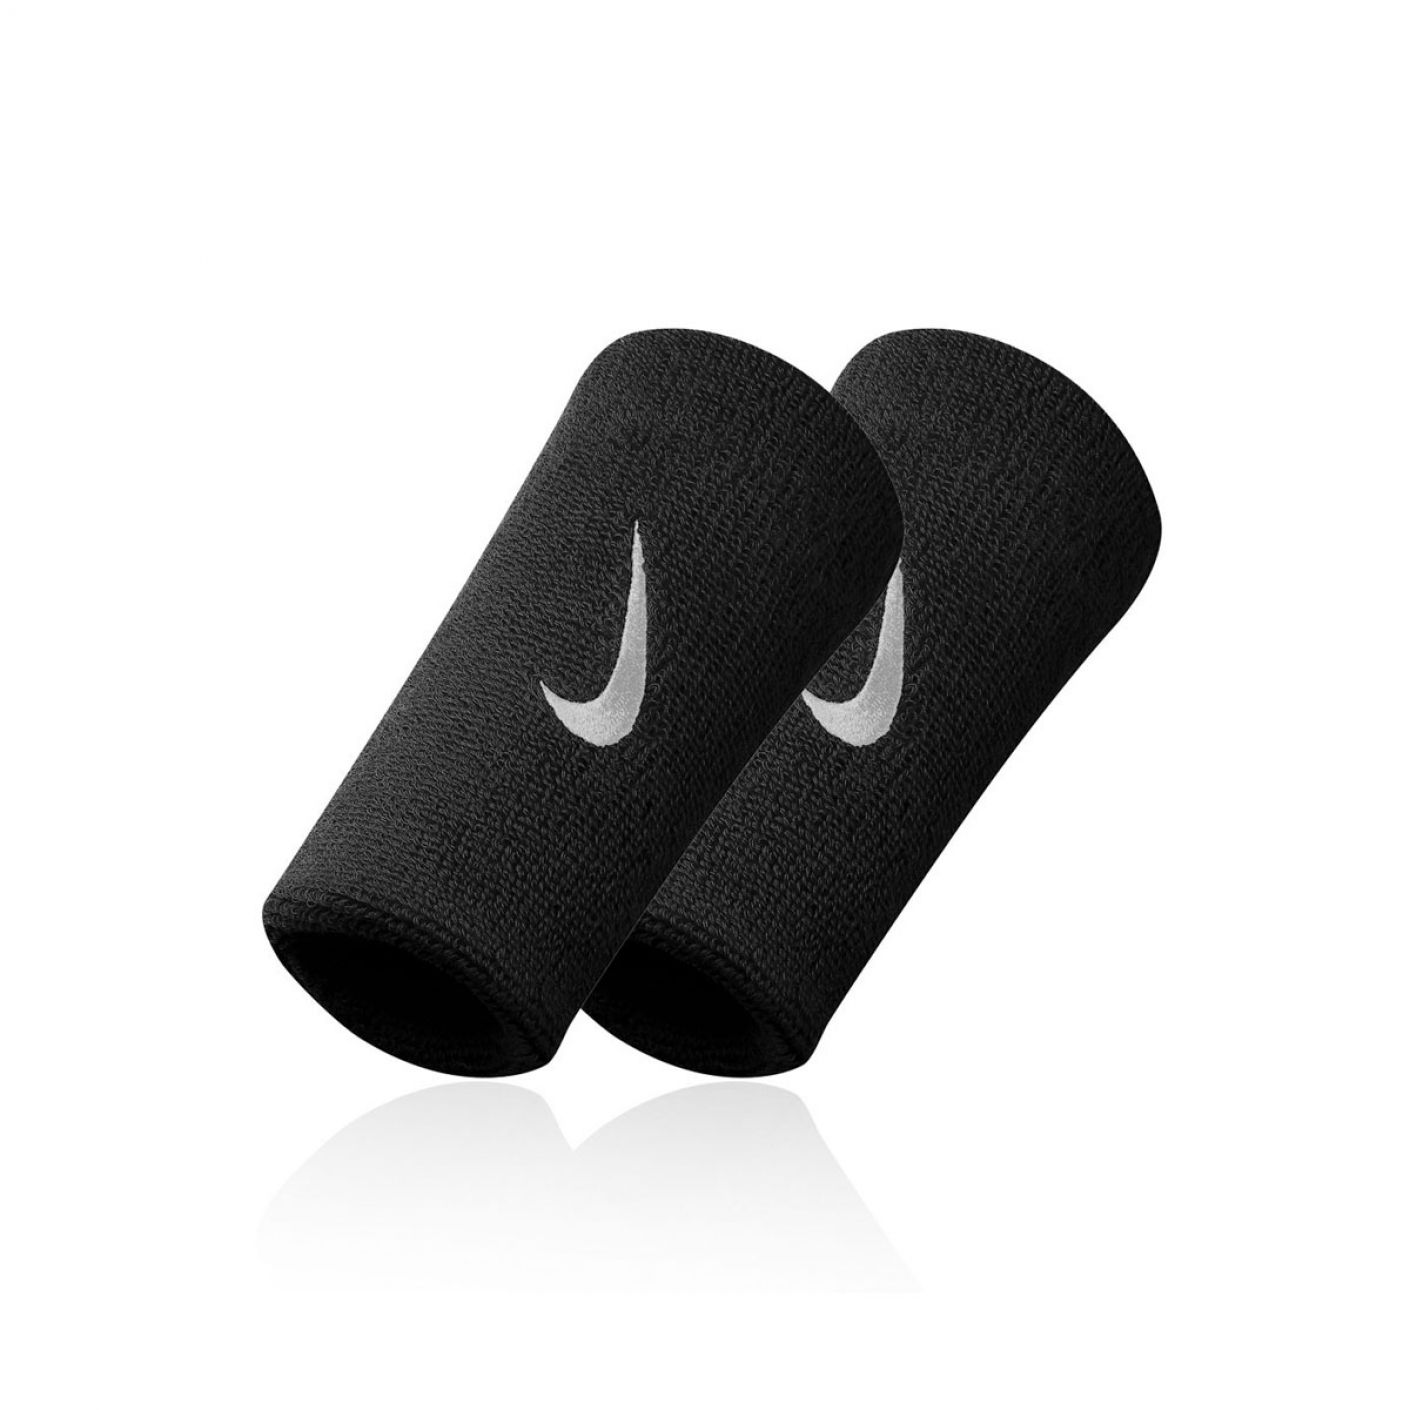 Nike Double Wristbands Cuffs Black